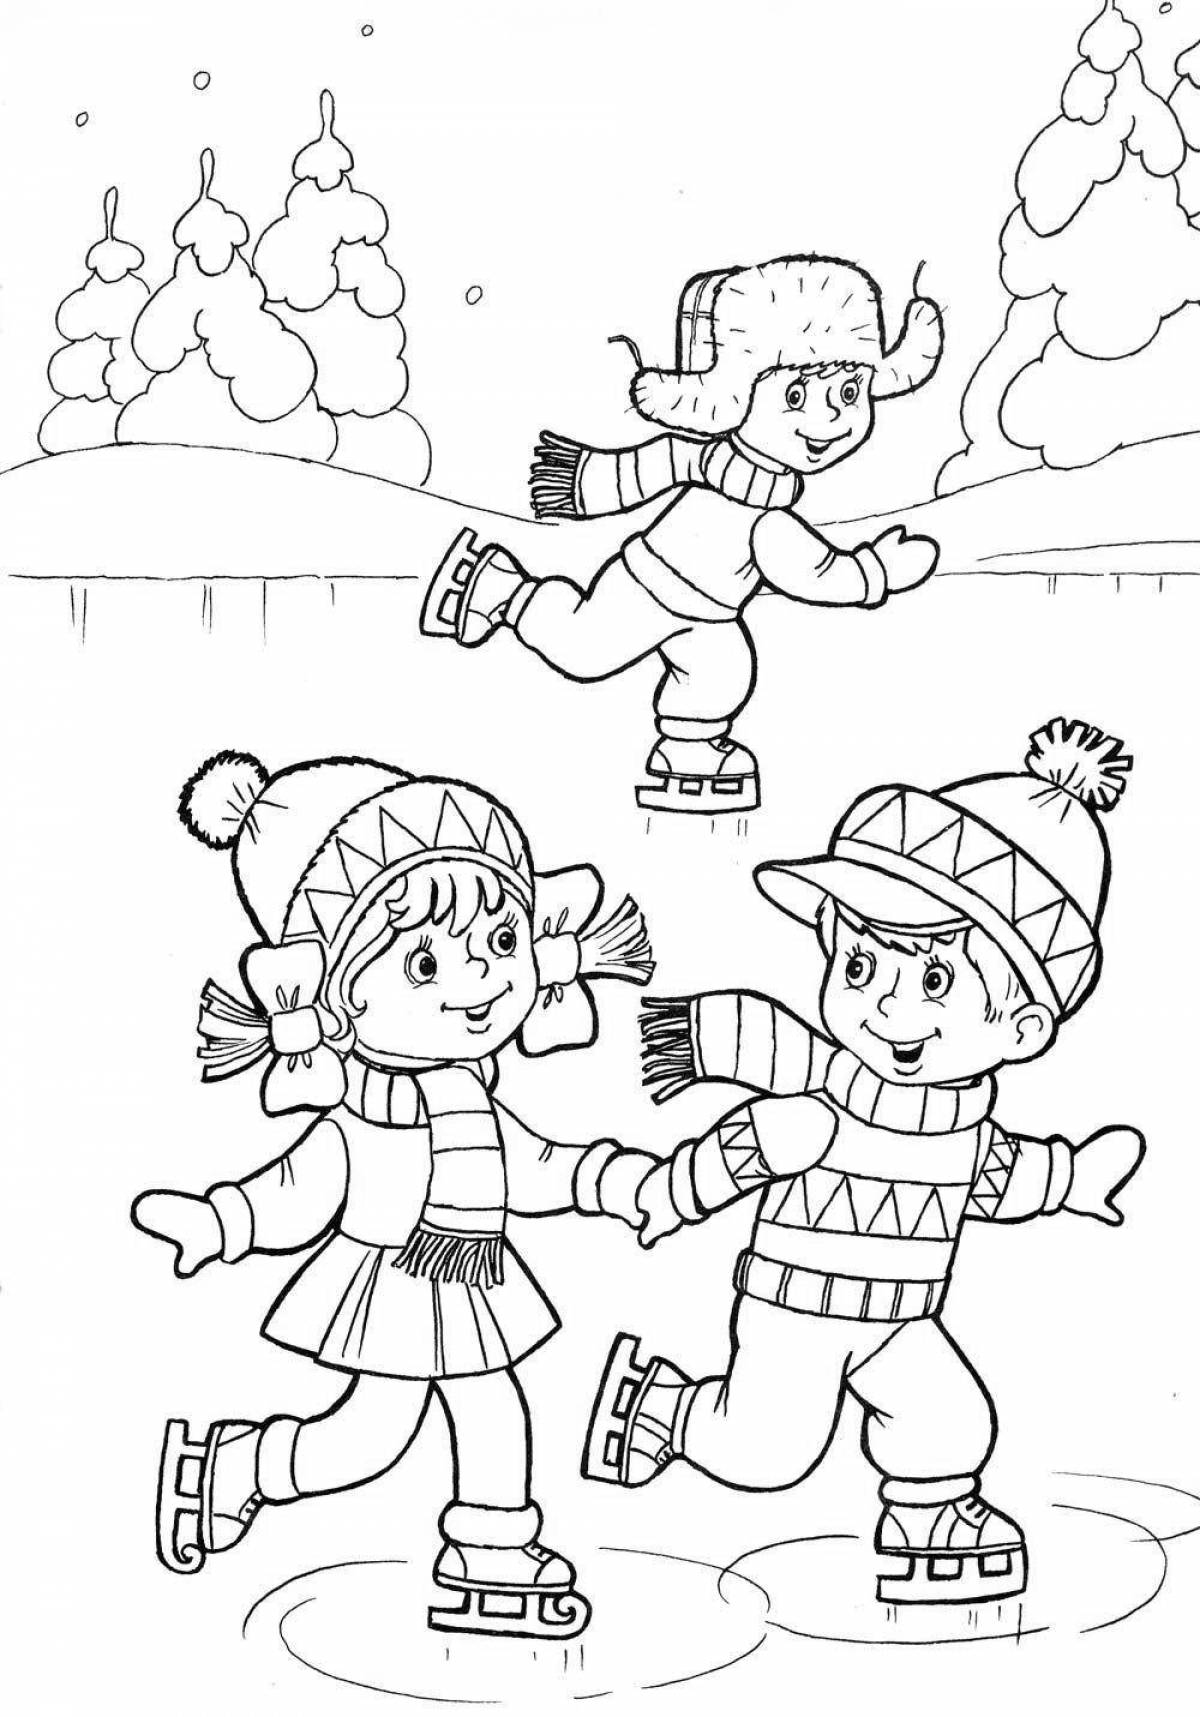 Children's shiny winter coloring book